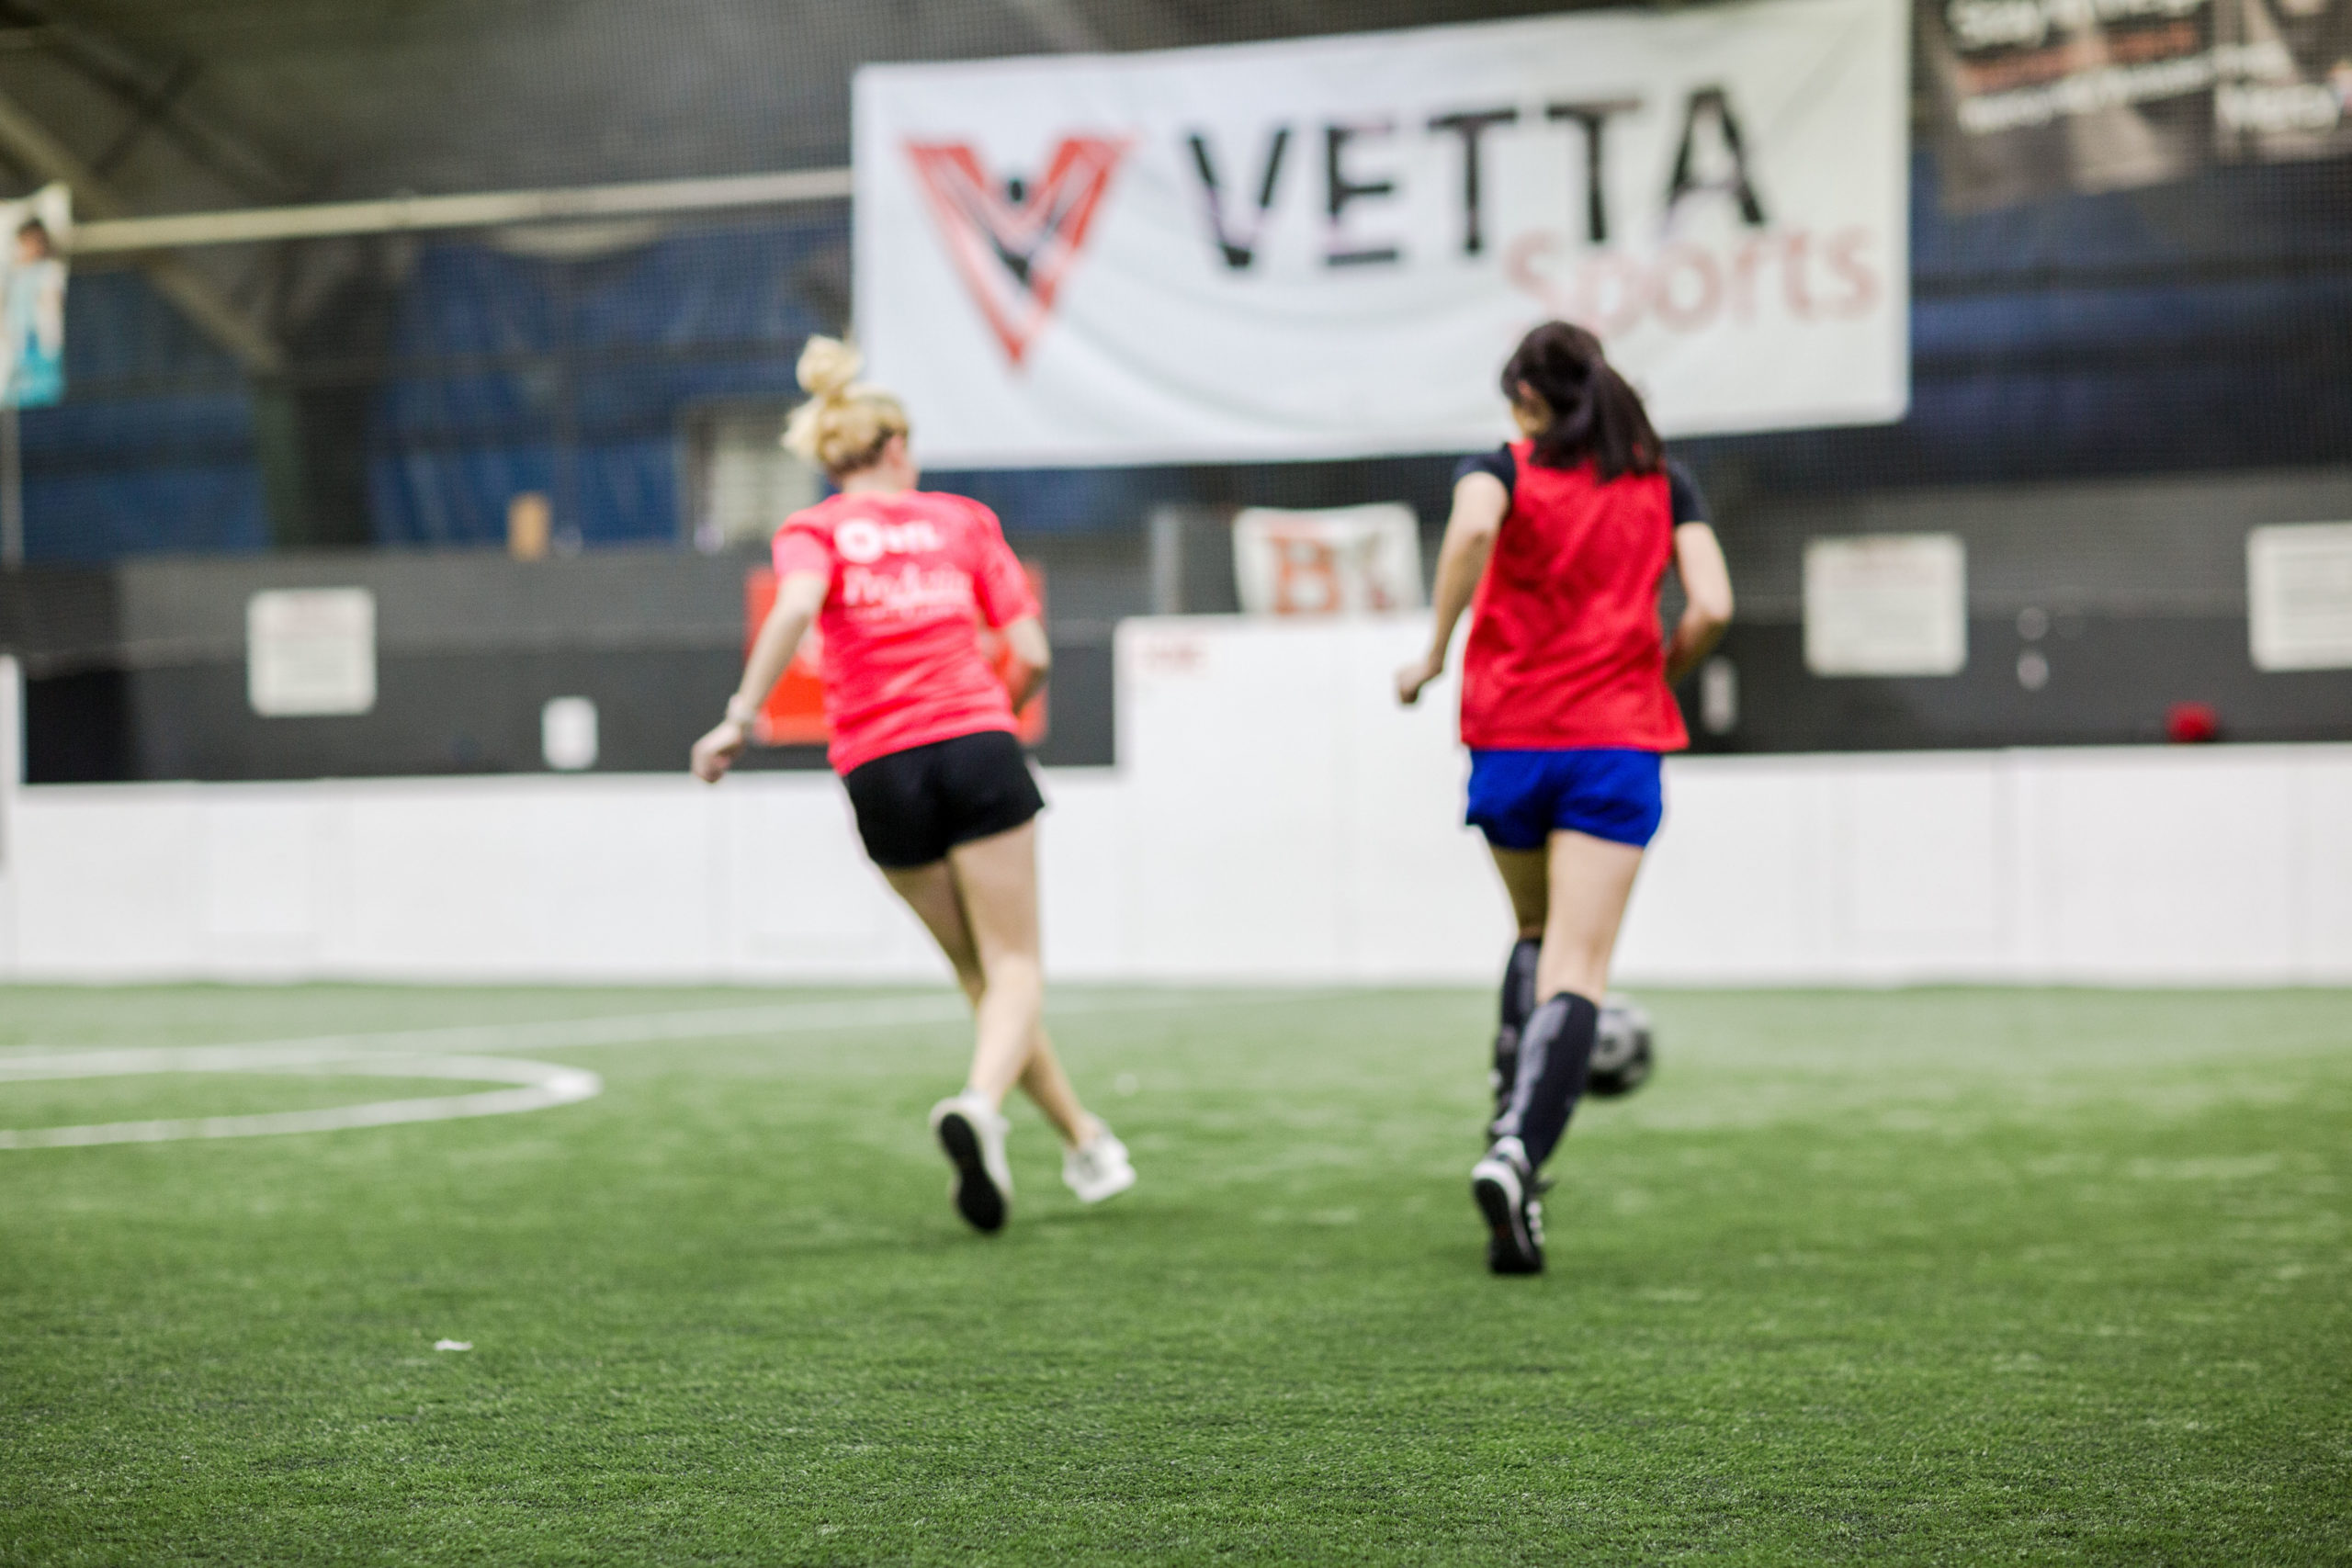 Vetta Sports - Where St. Louis Plays